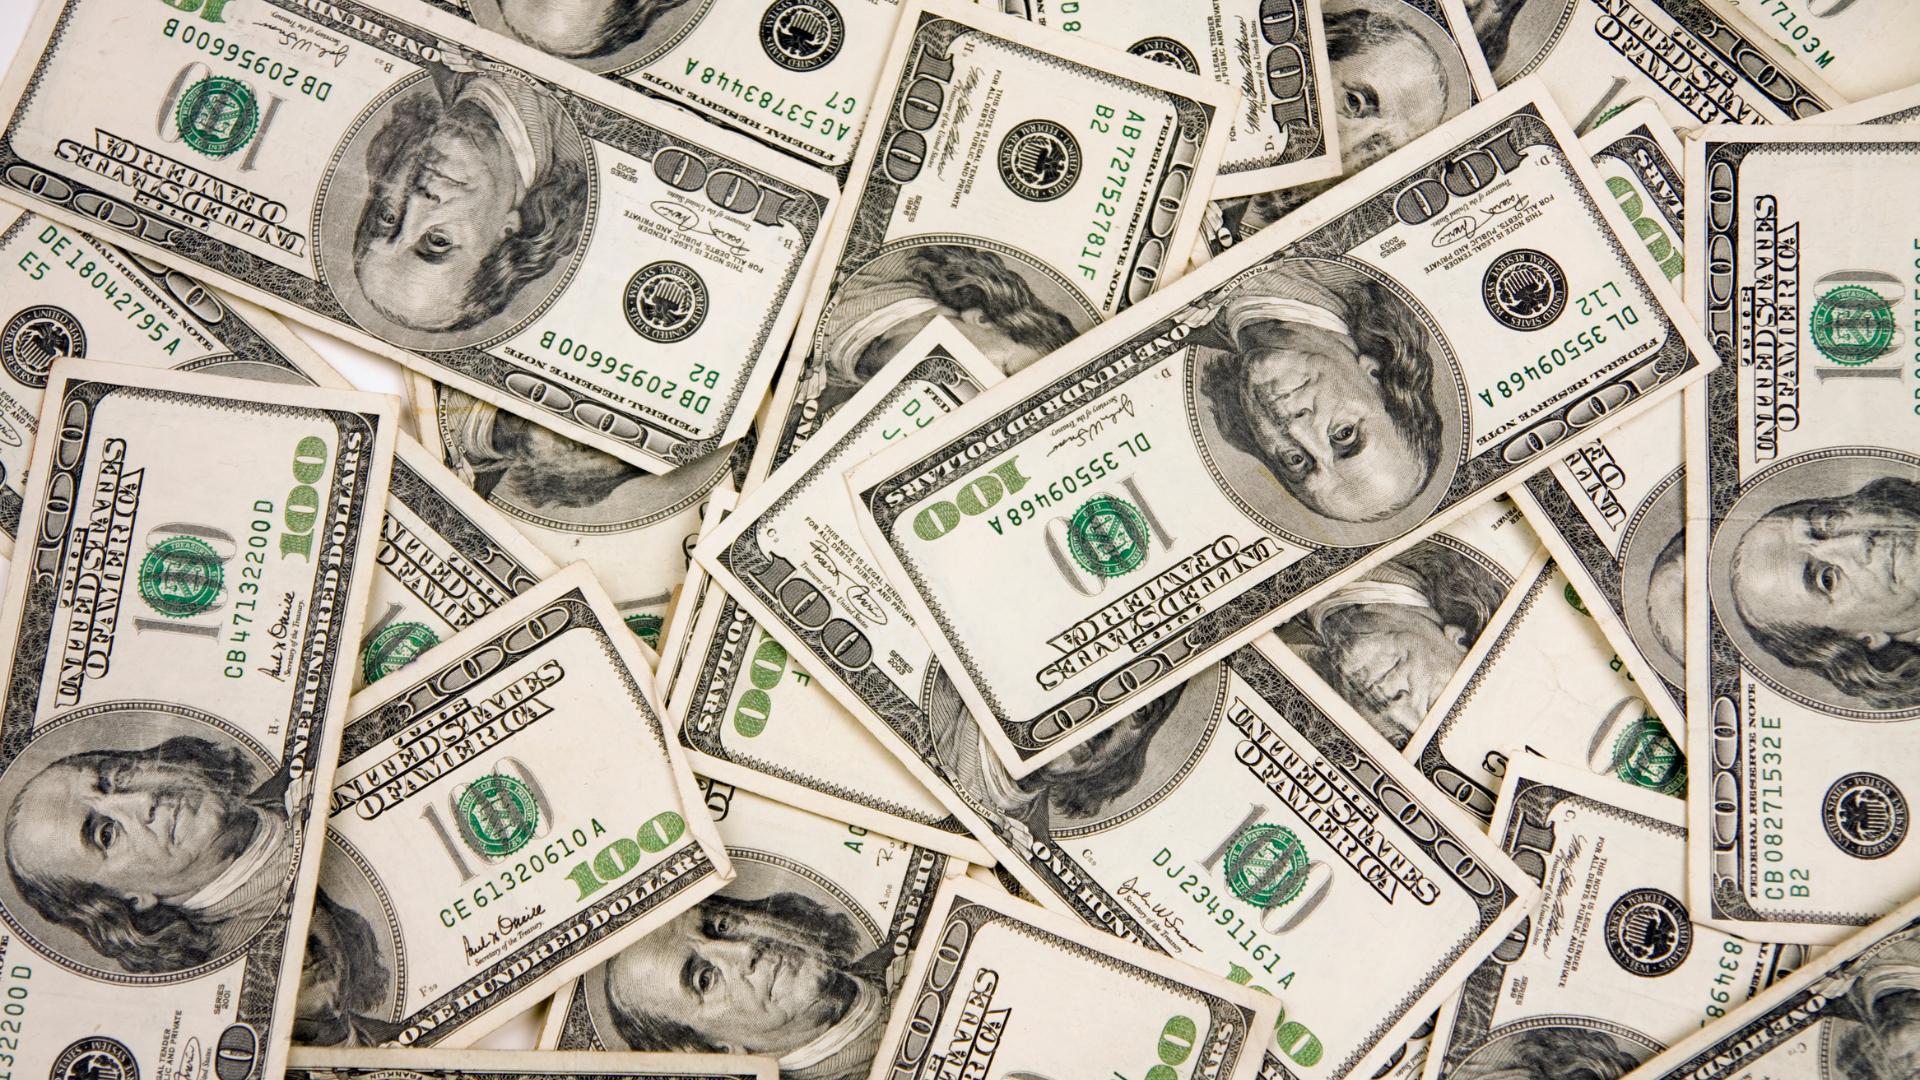 dollari americani stesi sul pavimento per simboleggiare i profitti